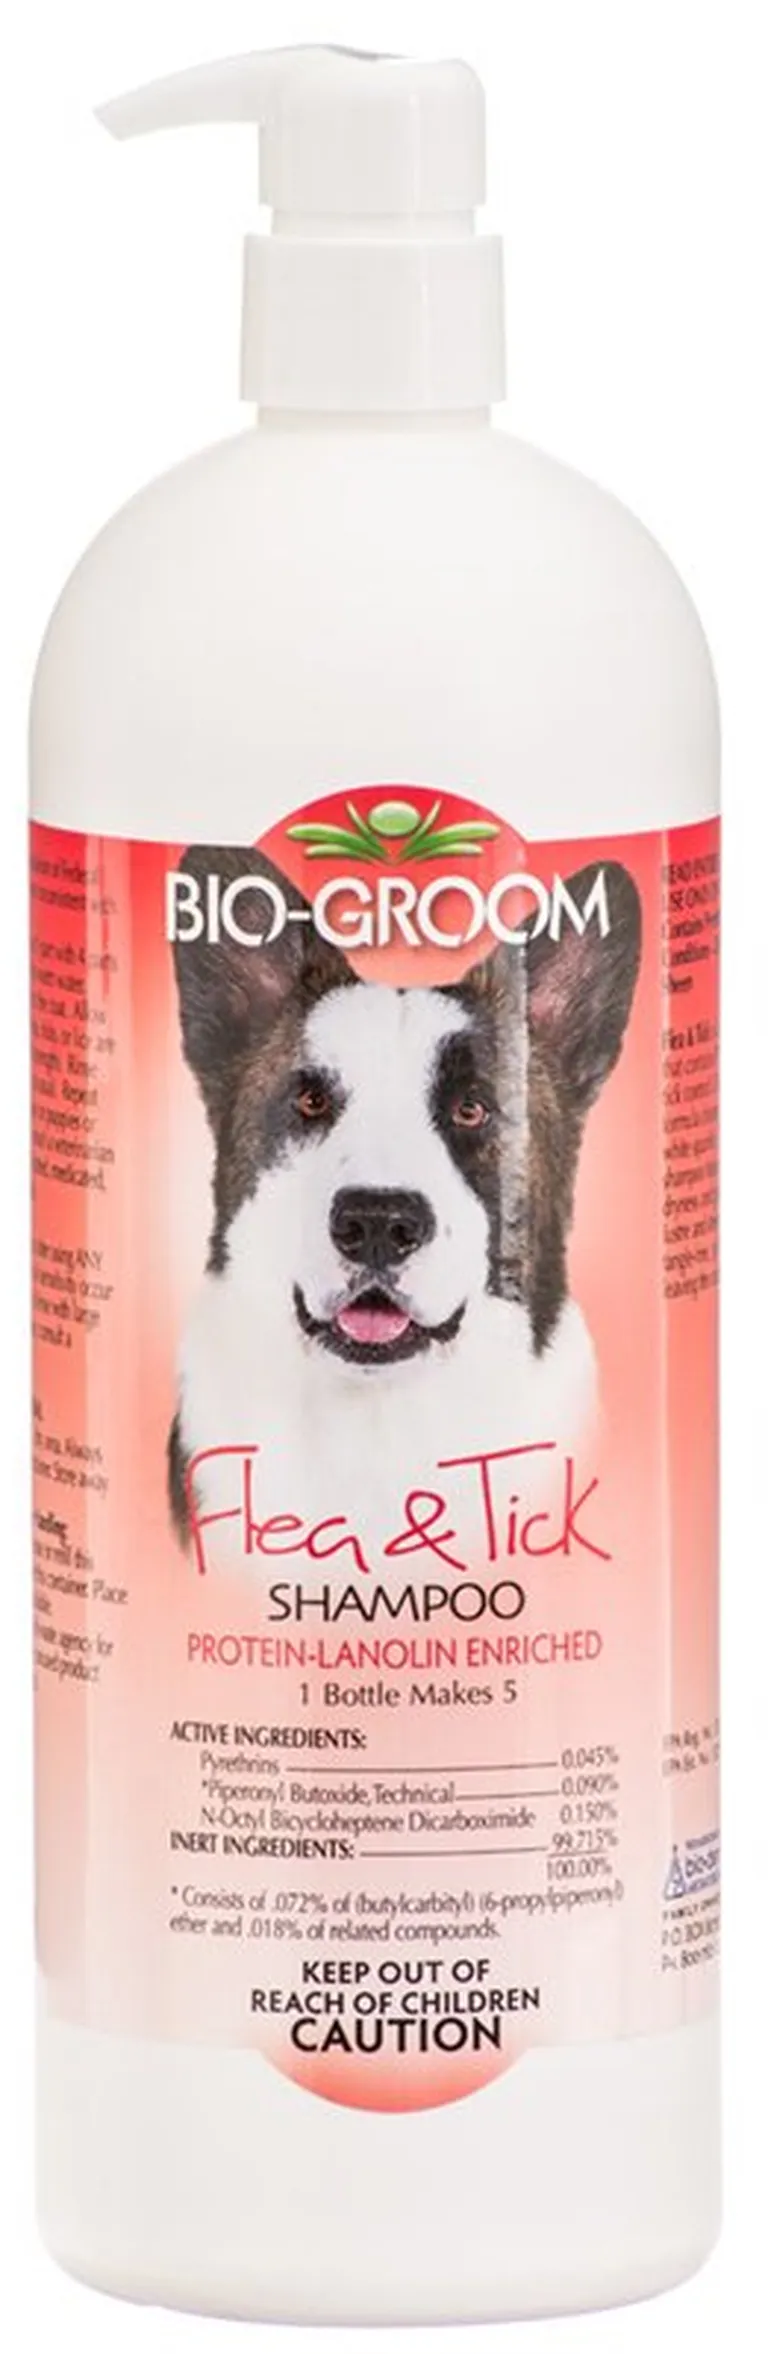 Bio Groom Flea and Tick Shampoo Photo 1